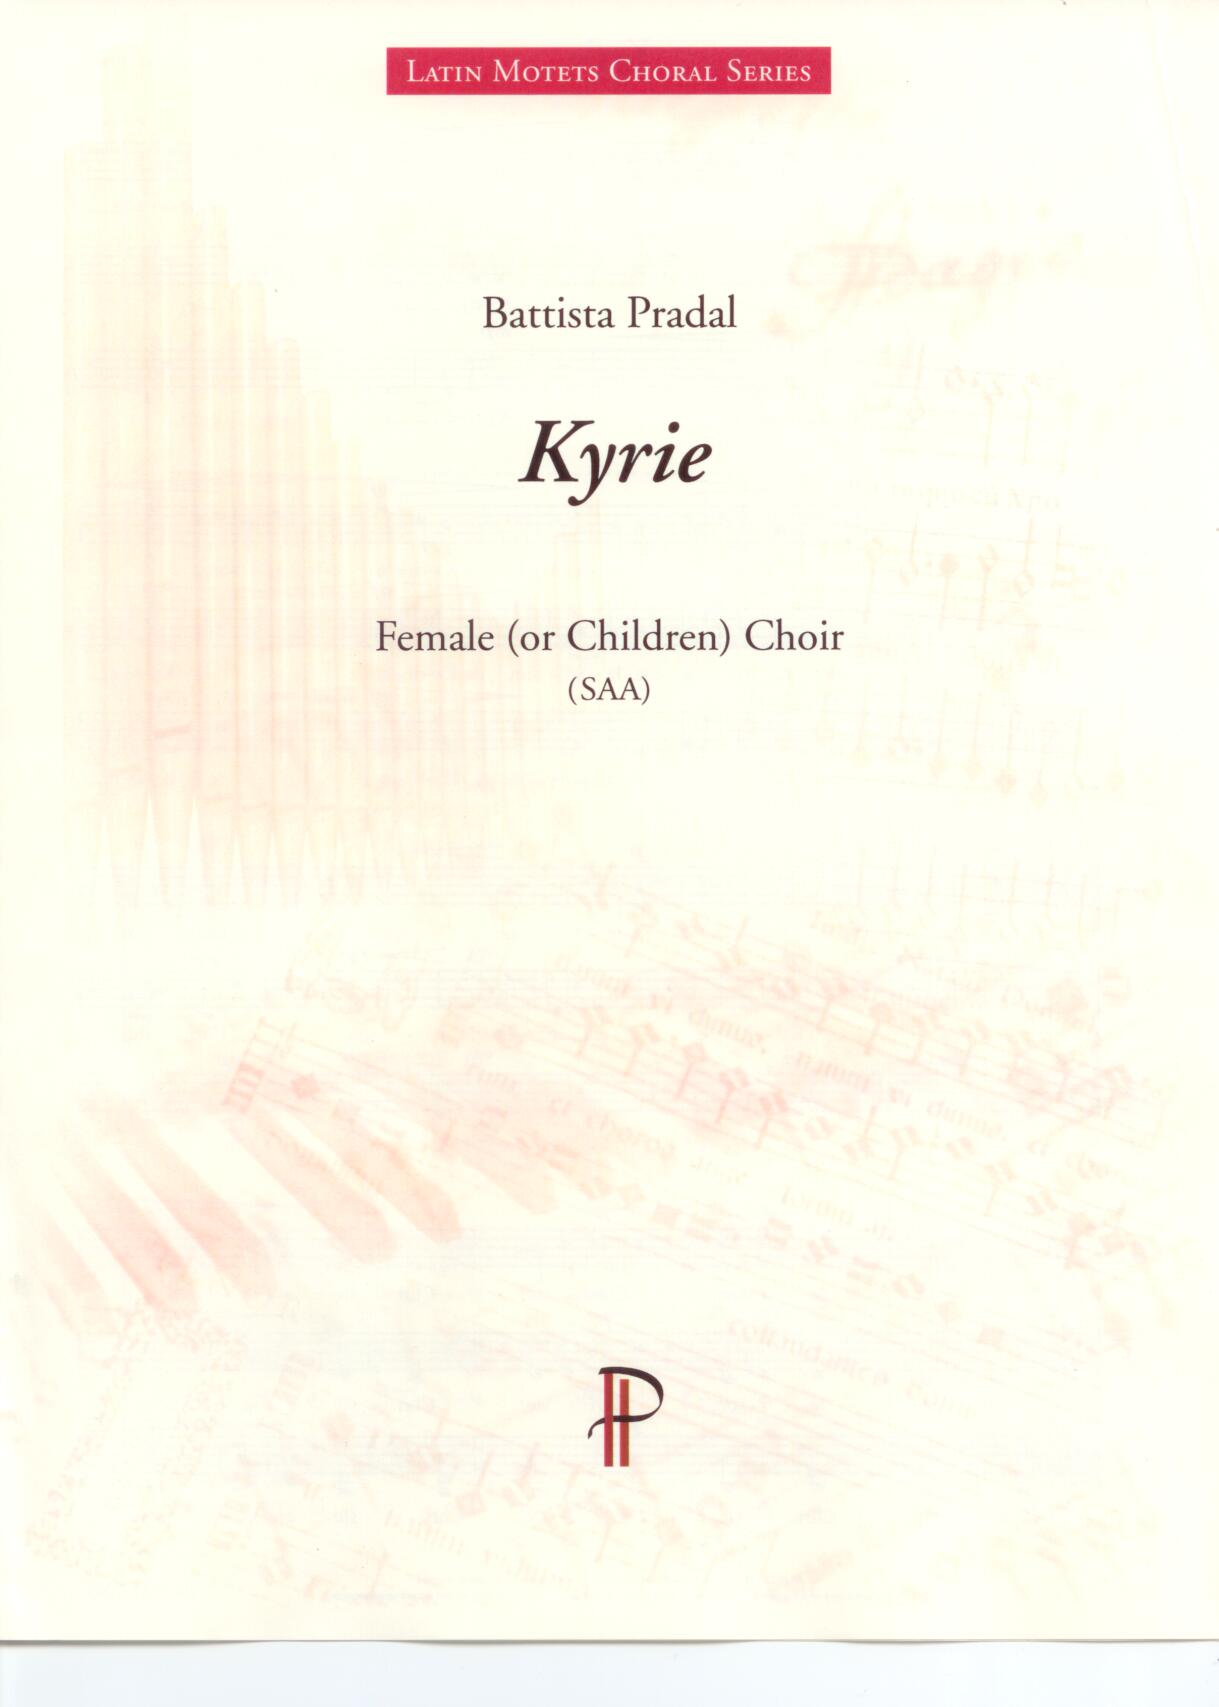 Kyrie - Show sample score